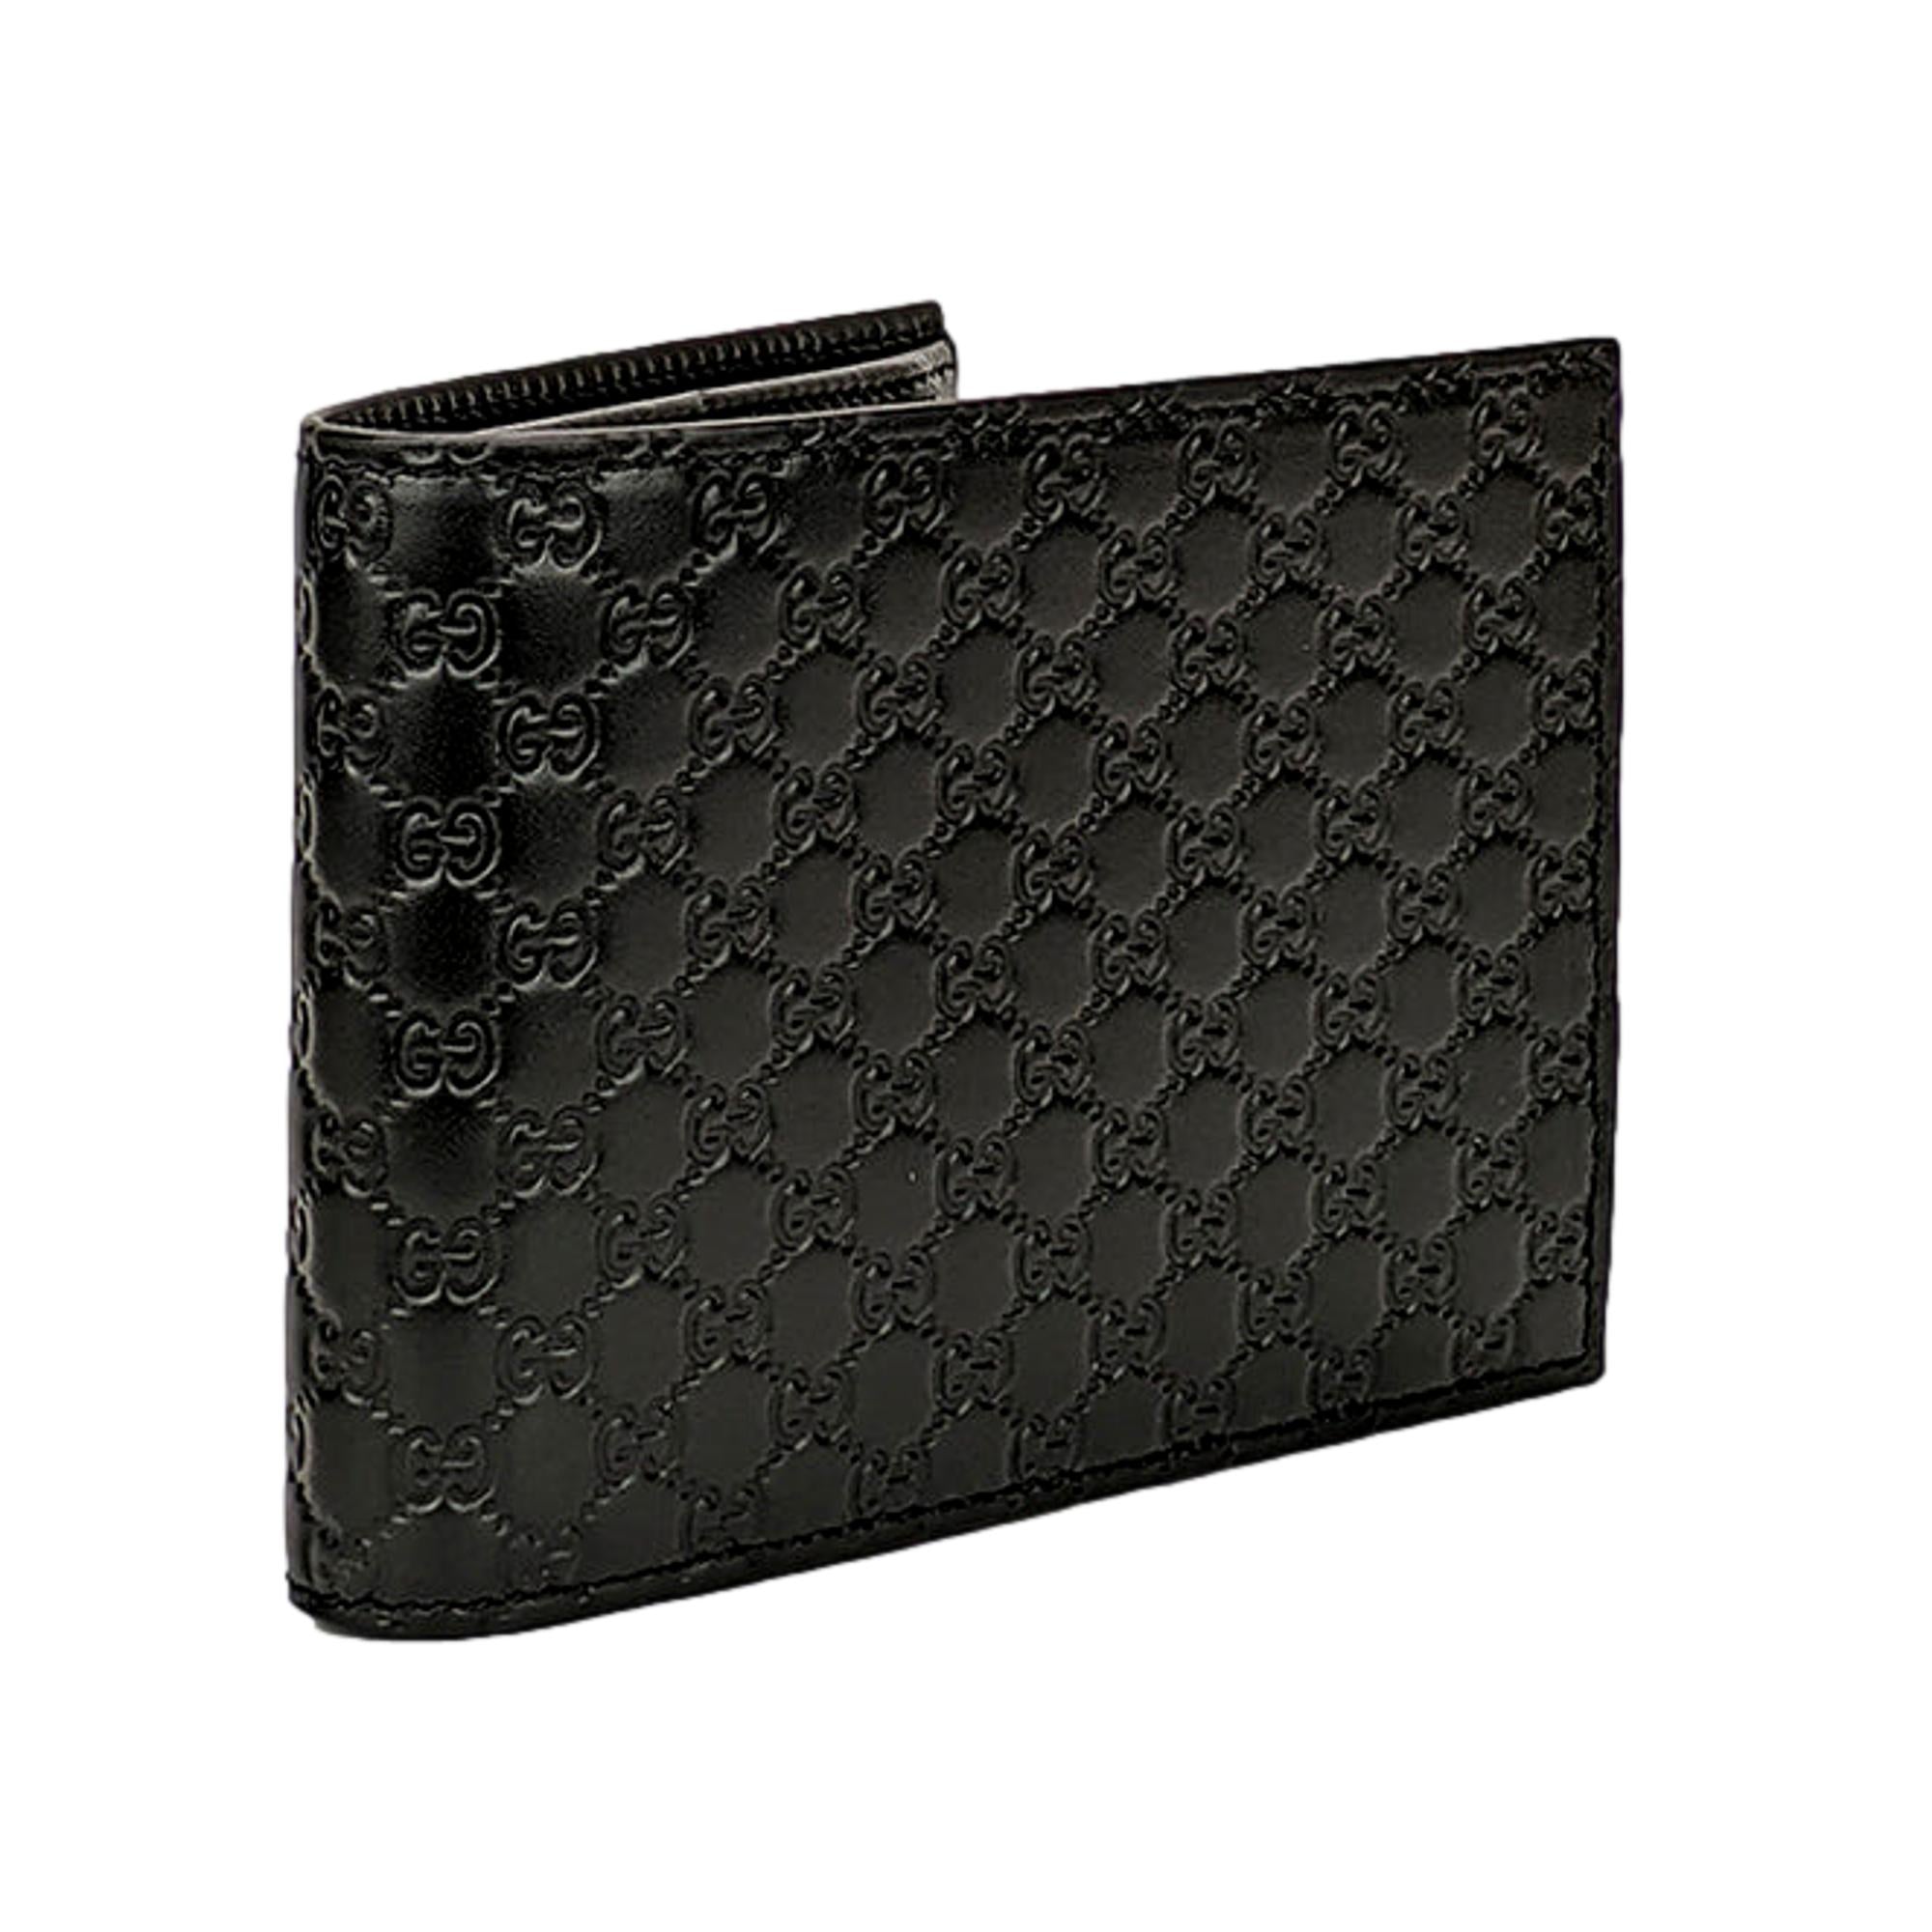 Gucci Men's Microguccissima GG Black Leather Trifold ID Wallet - LUXURYMRKT